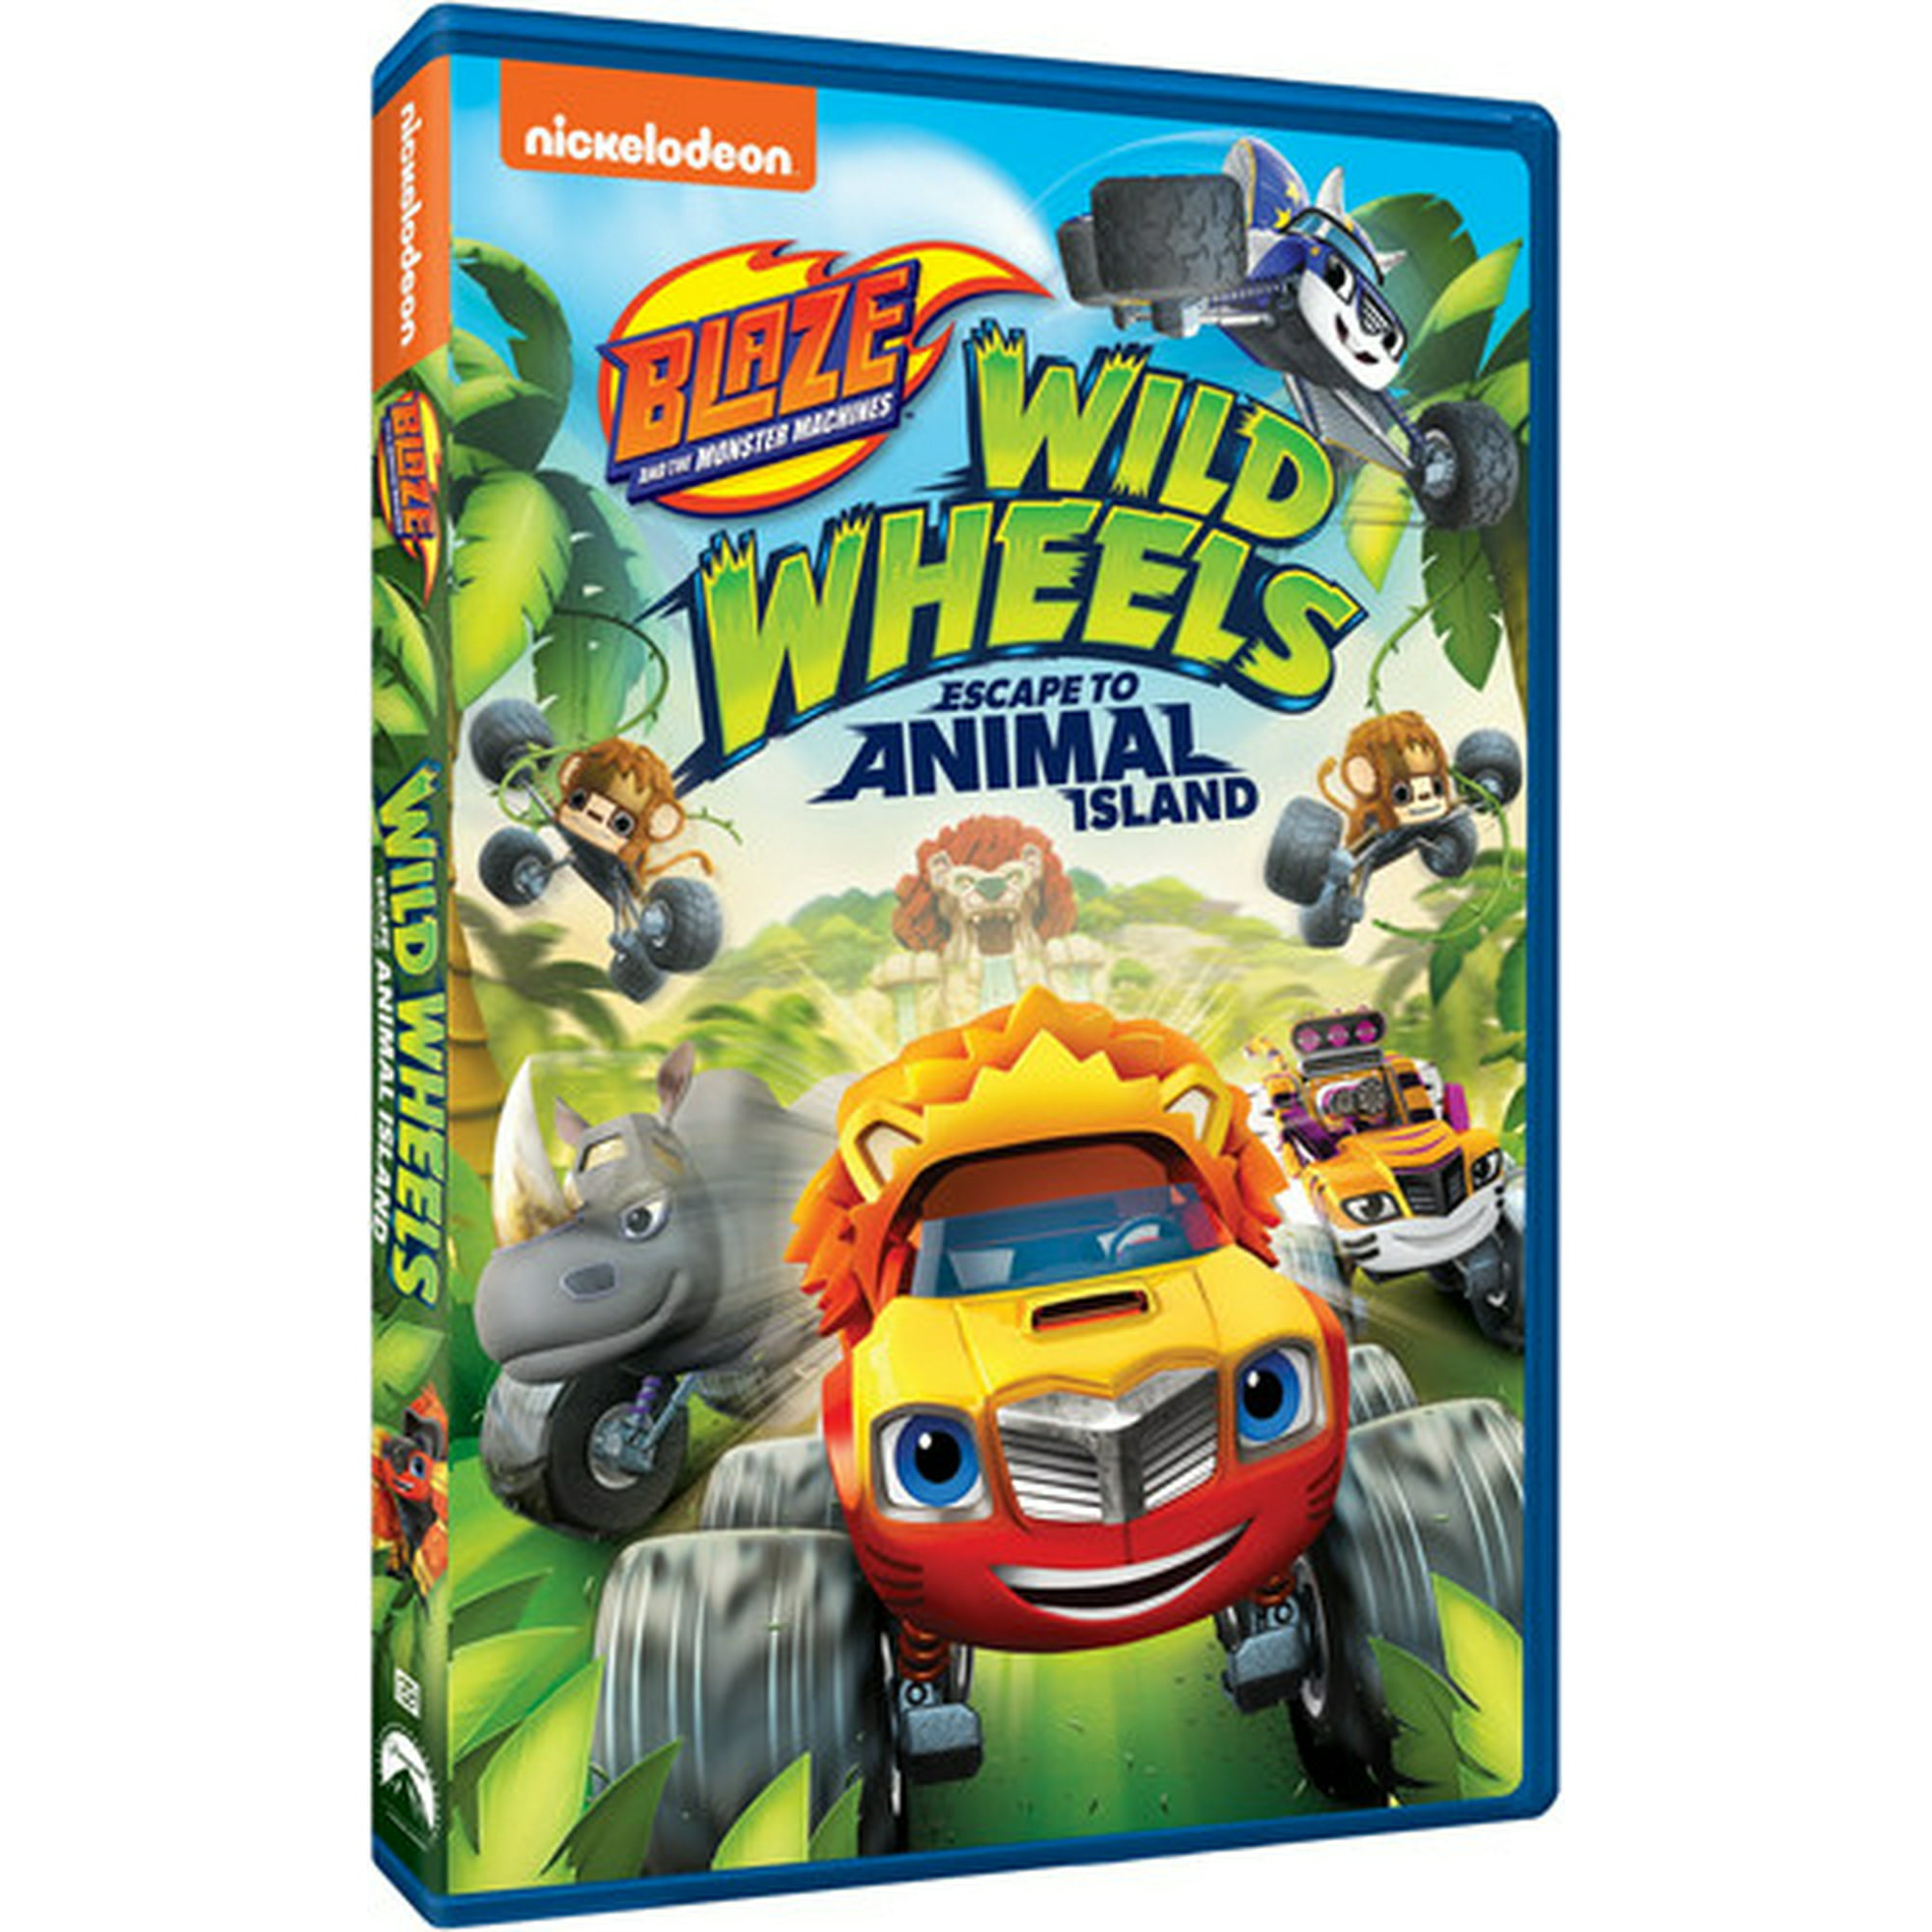 Blaze and the Monster Machines: Wild Wheels Escape to Animal Island [DVD]  Wid | Walmart Canada